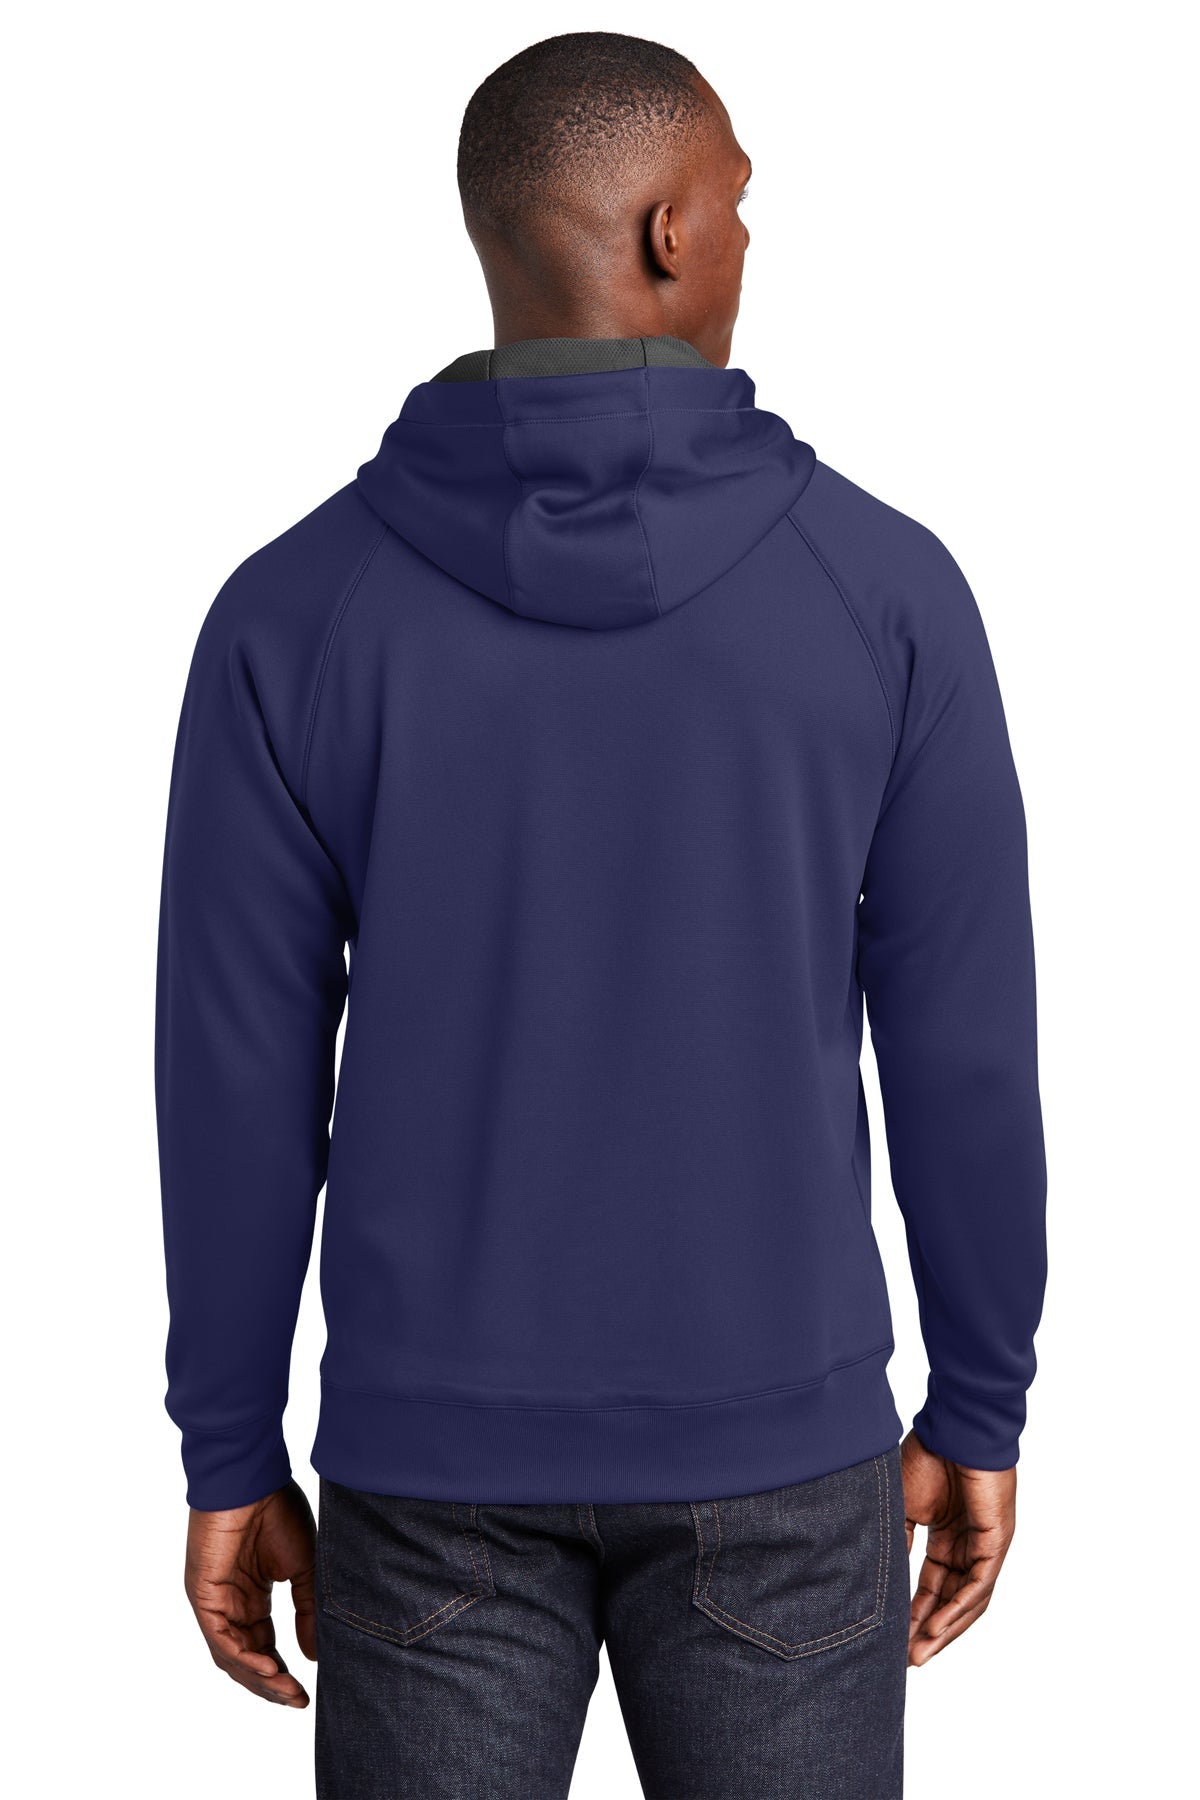 sport-tek_st250 _true navy_company_logo_sweatshirts